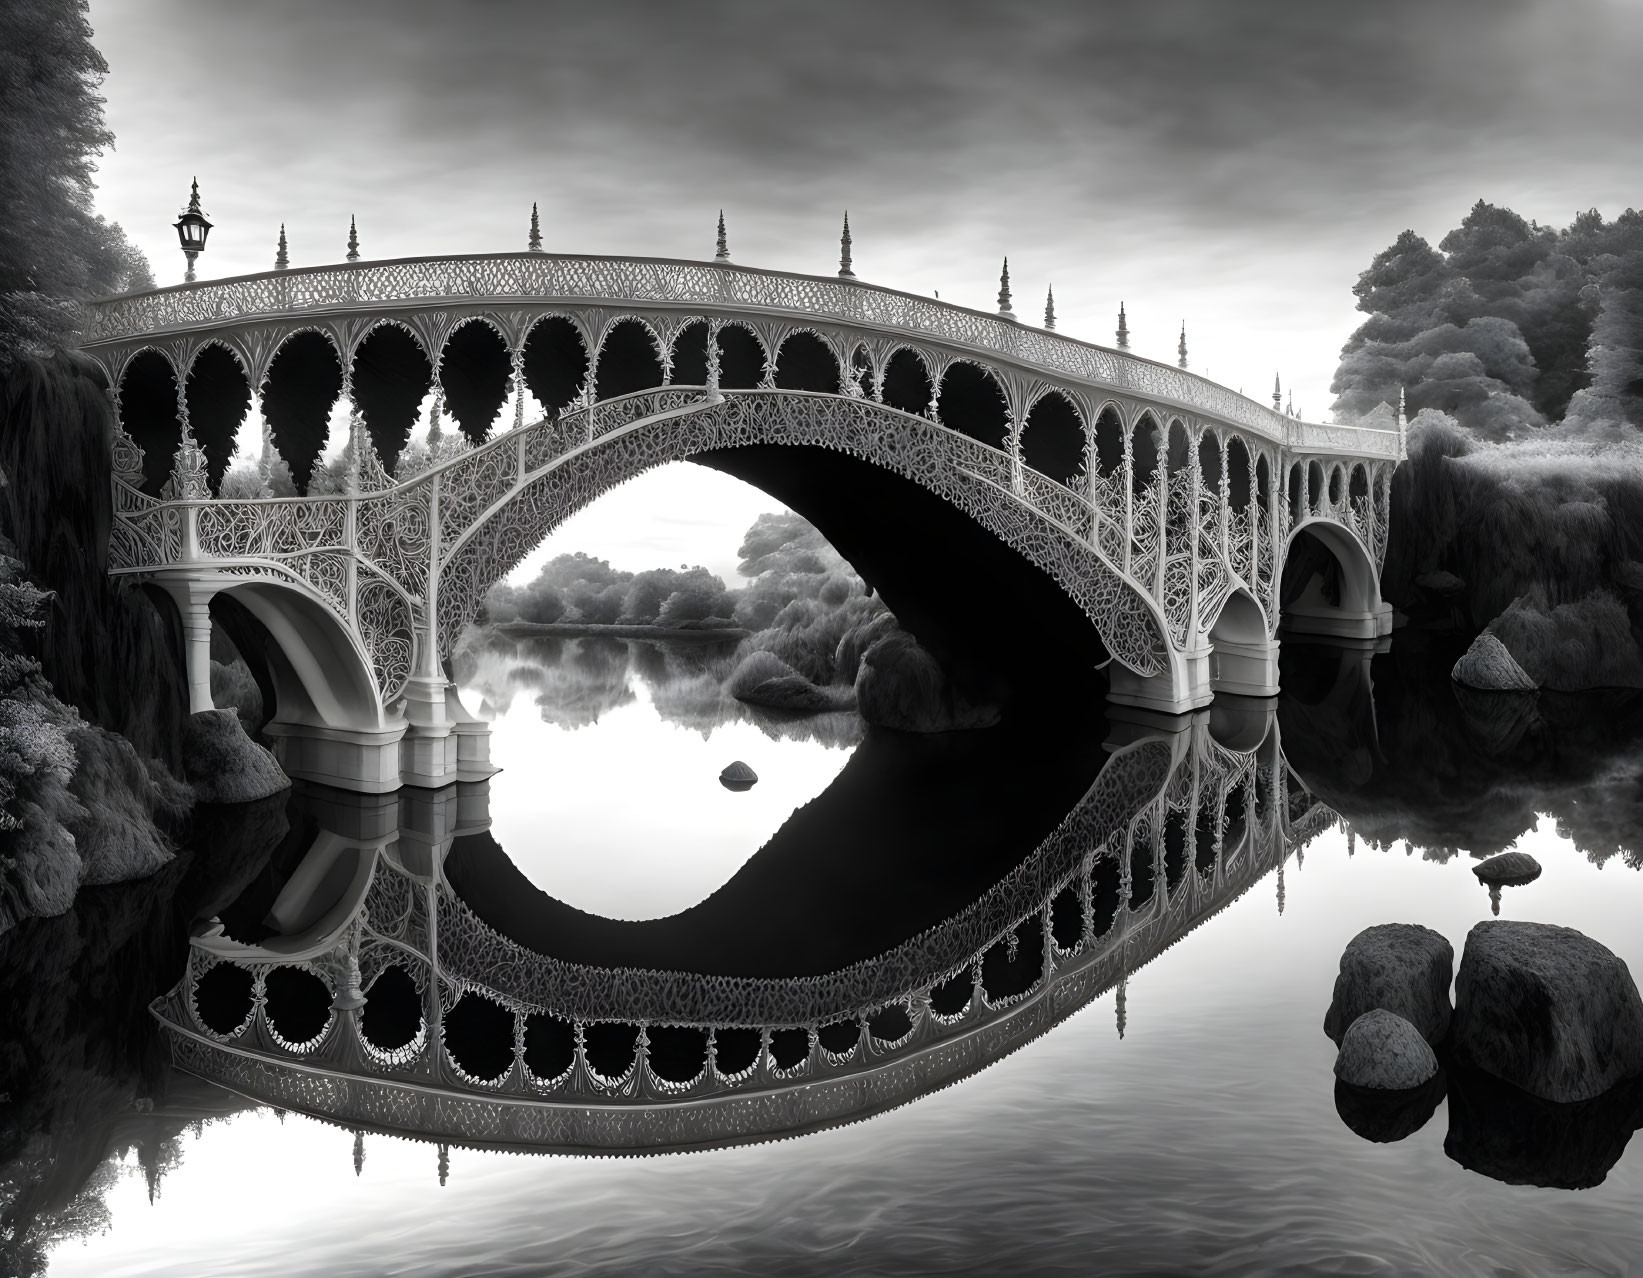 Intricate arched bridge over calm river in black-and-white landscape